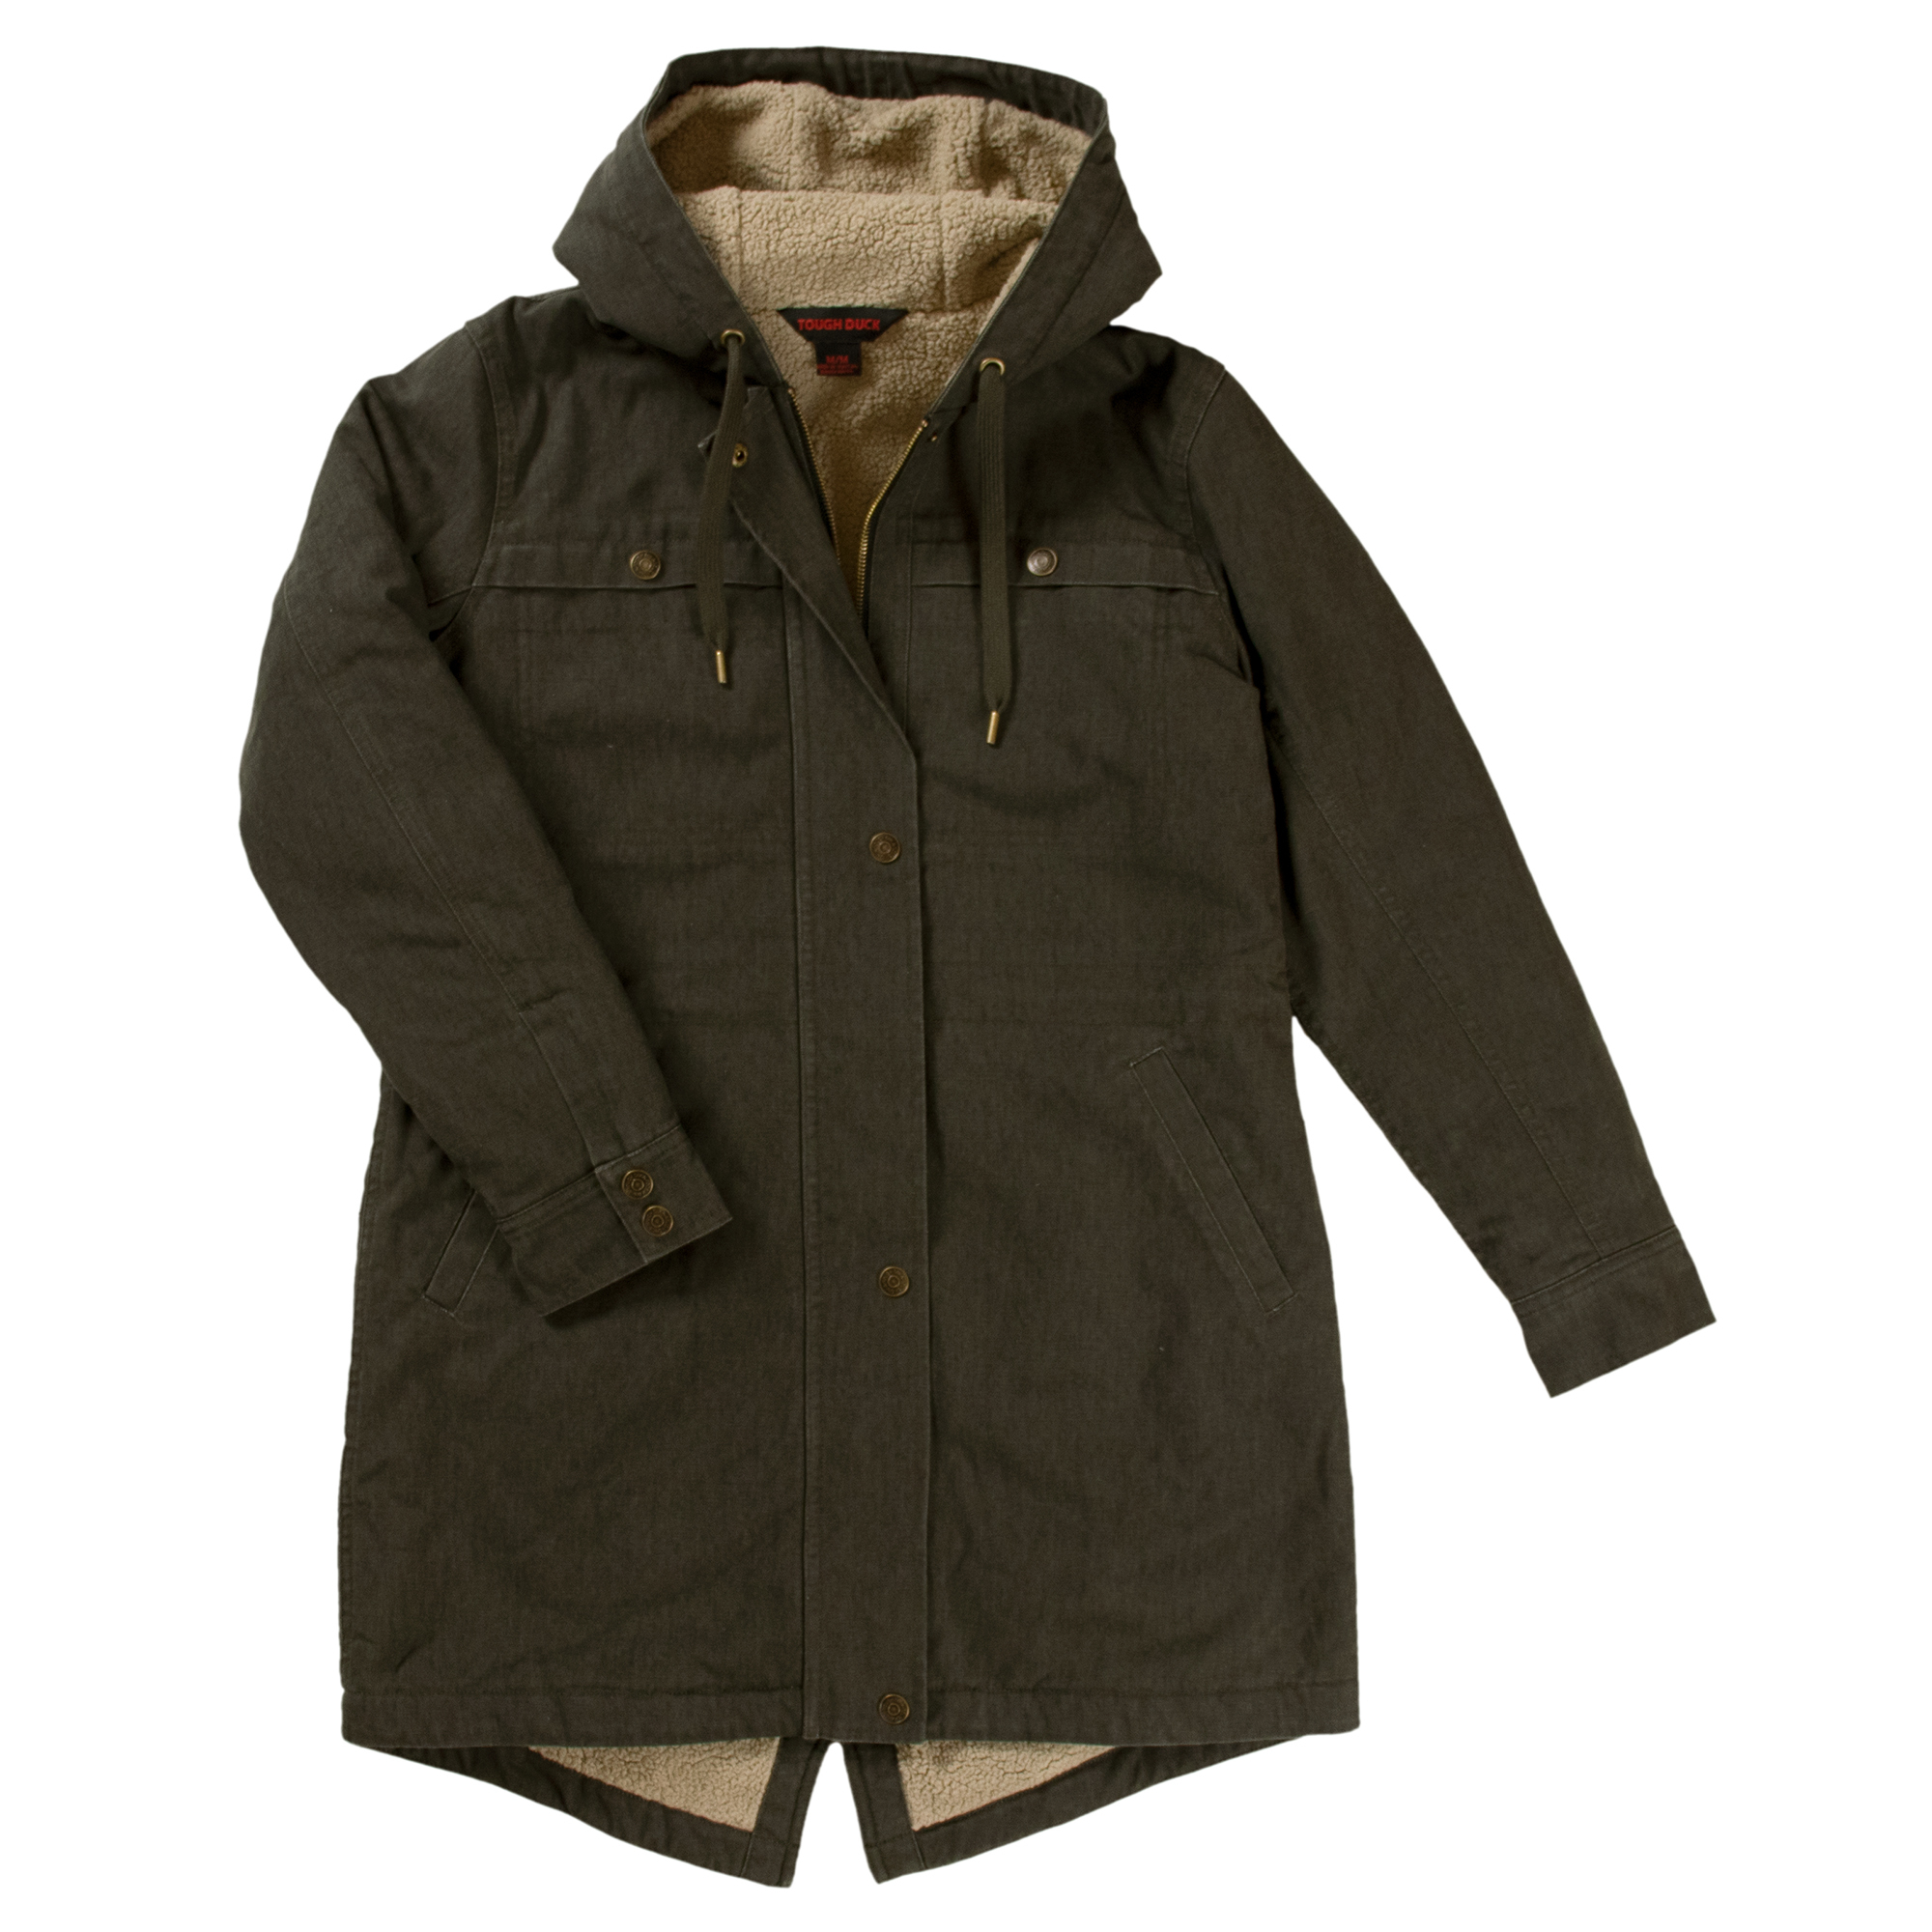 Tough Duck, Women's Sherpa Lined Jacket, Size L, Color OLIVE, Model WJ201-OLIVE-L